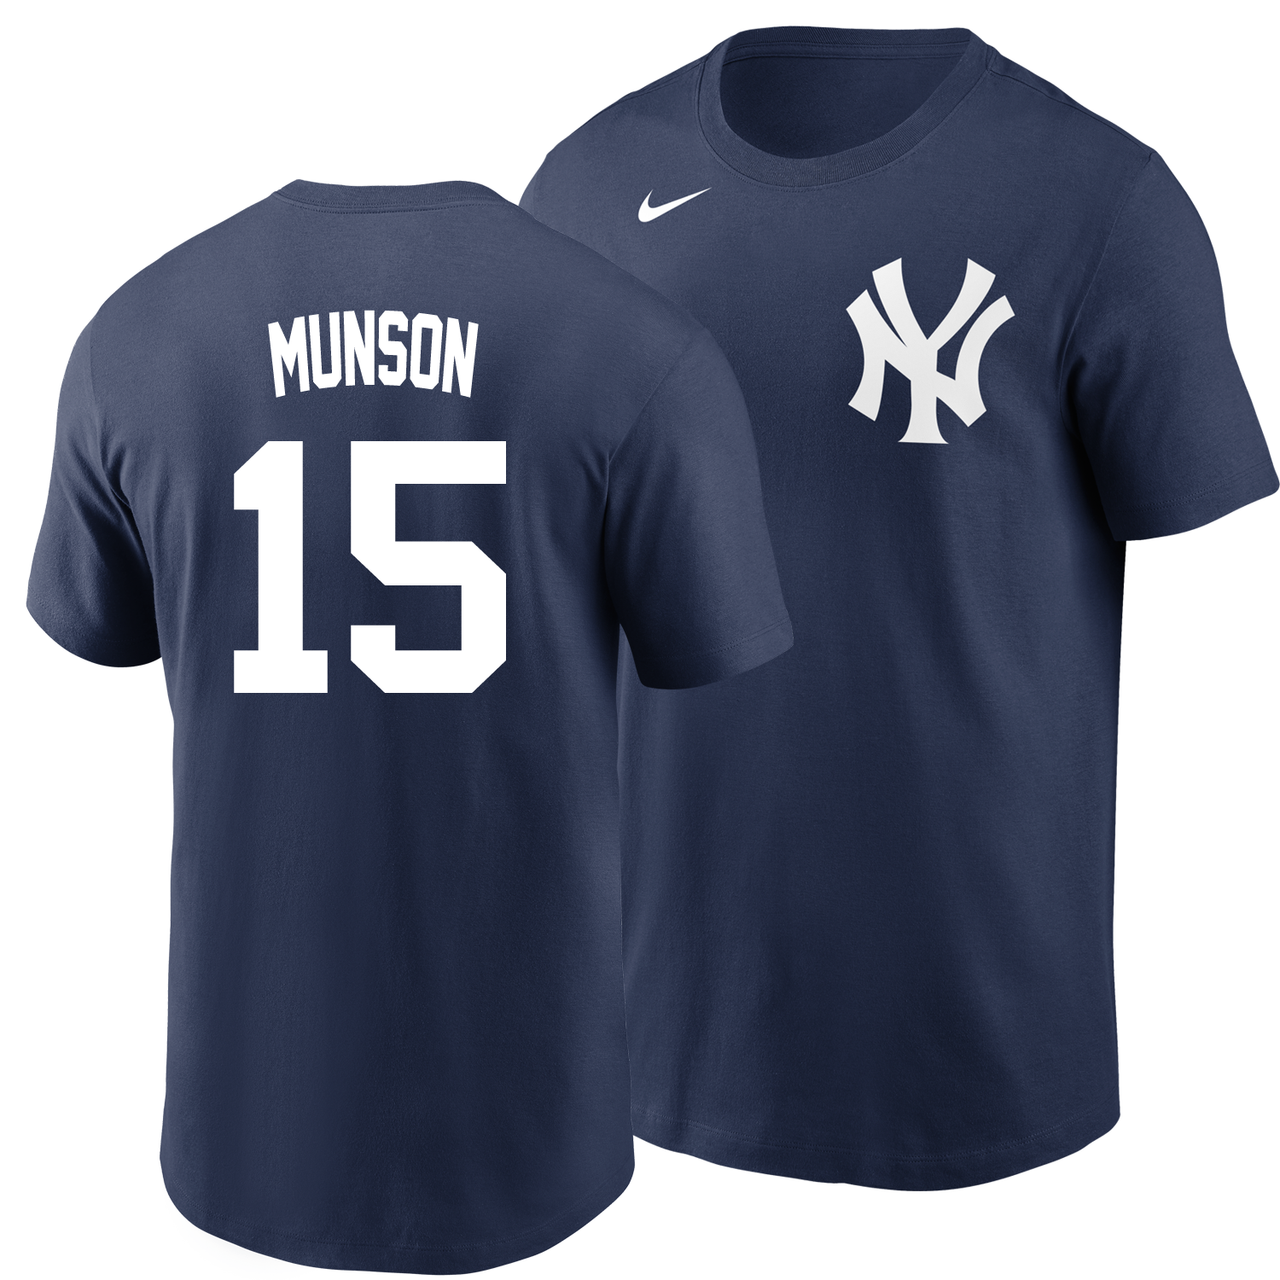 Yankees Thurman Munson Cooperstown Mens Tee